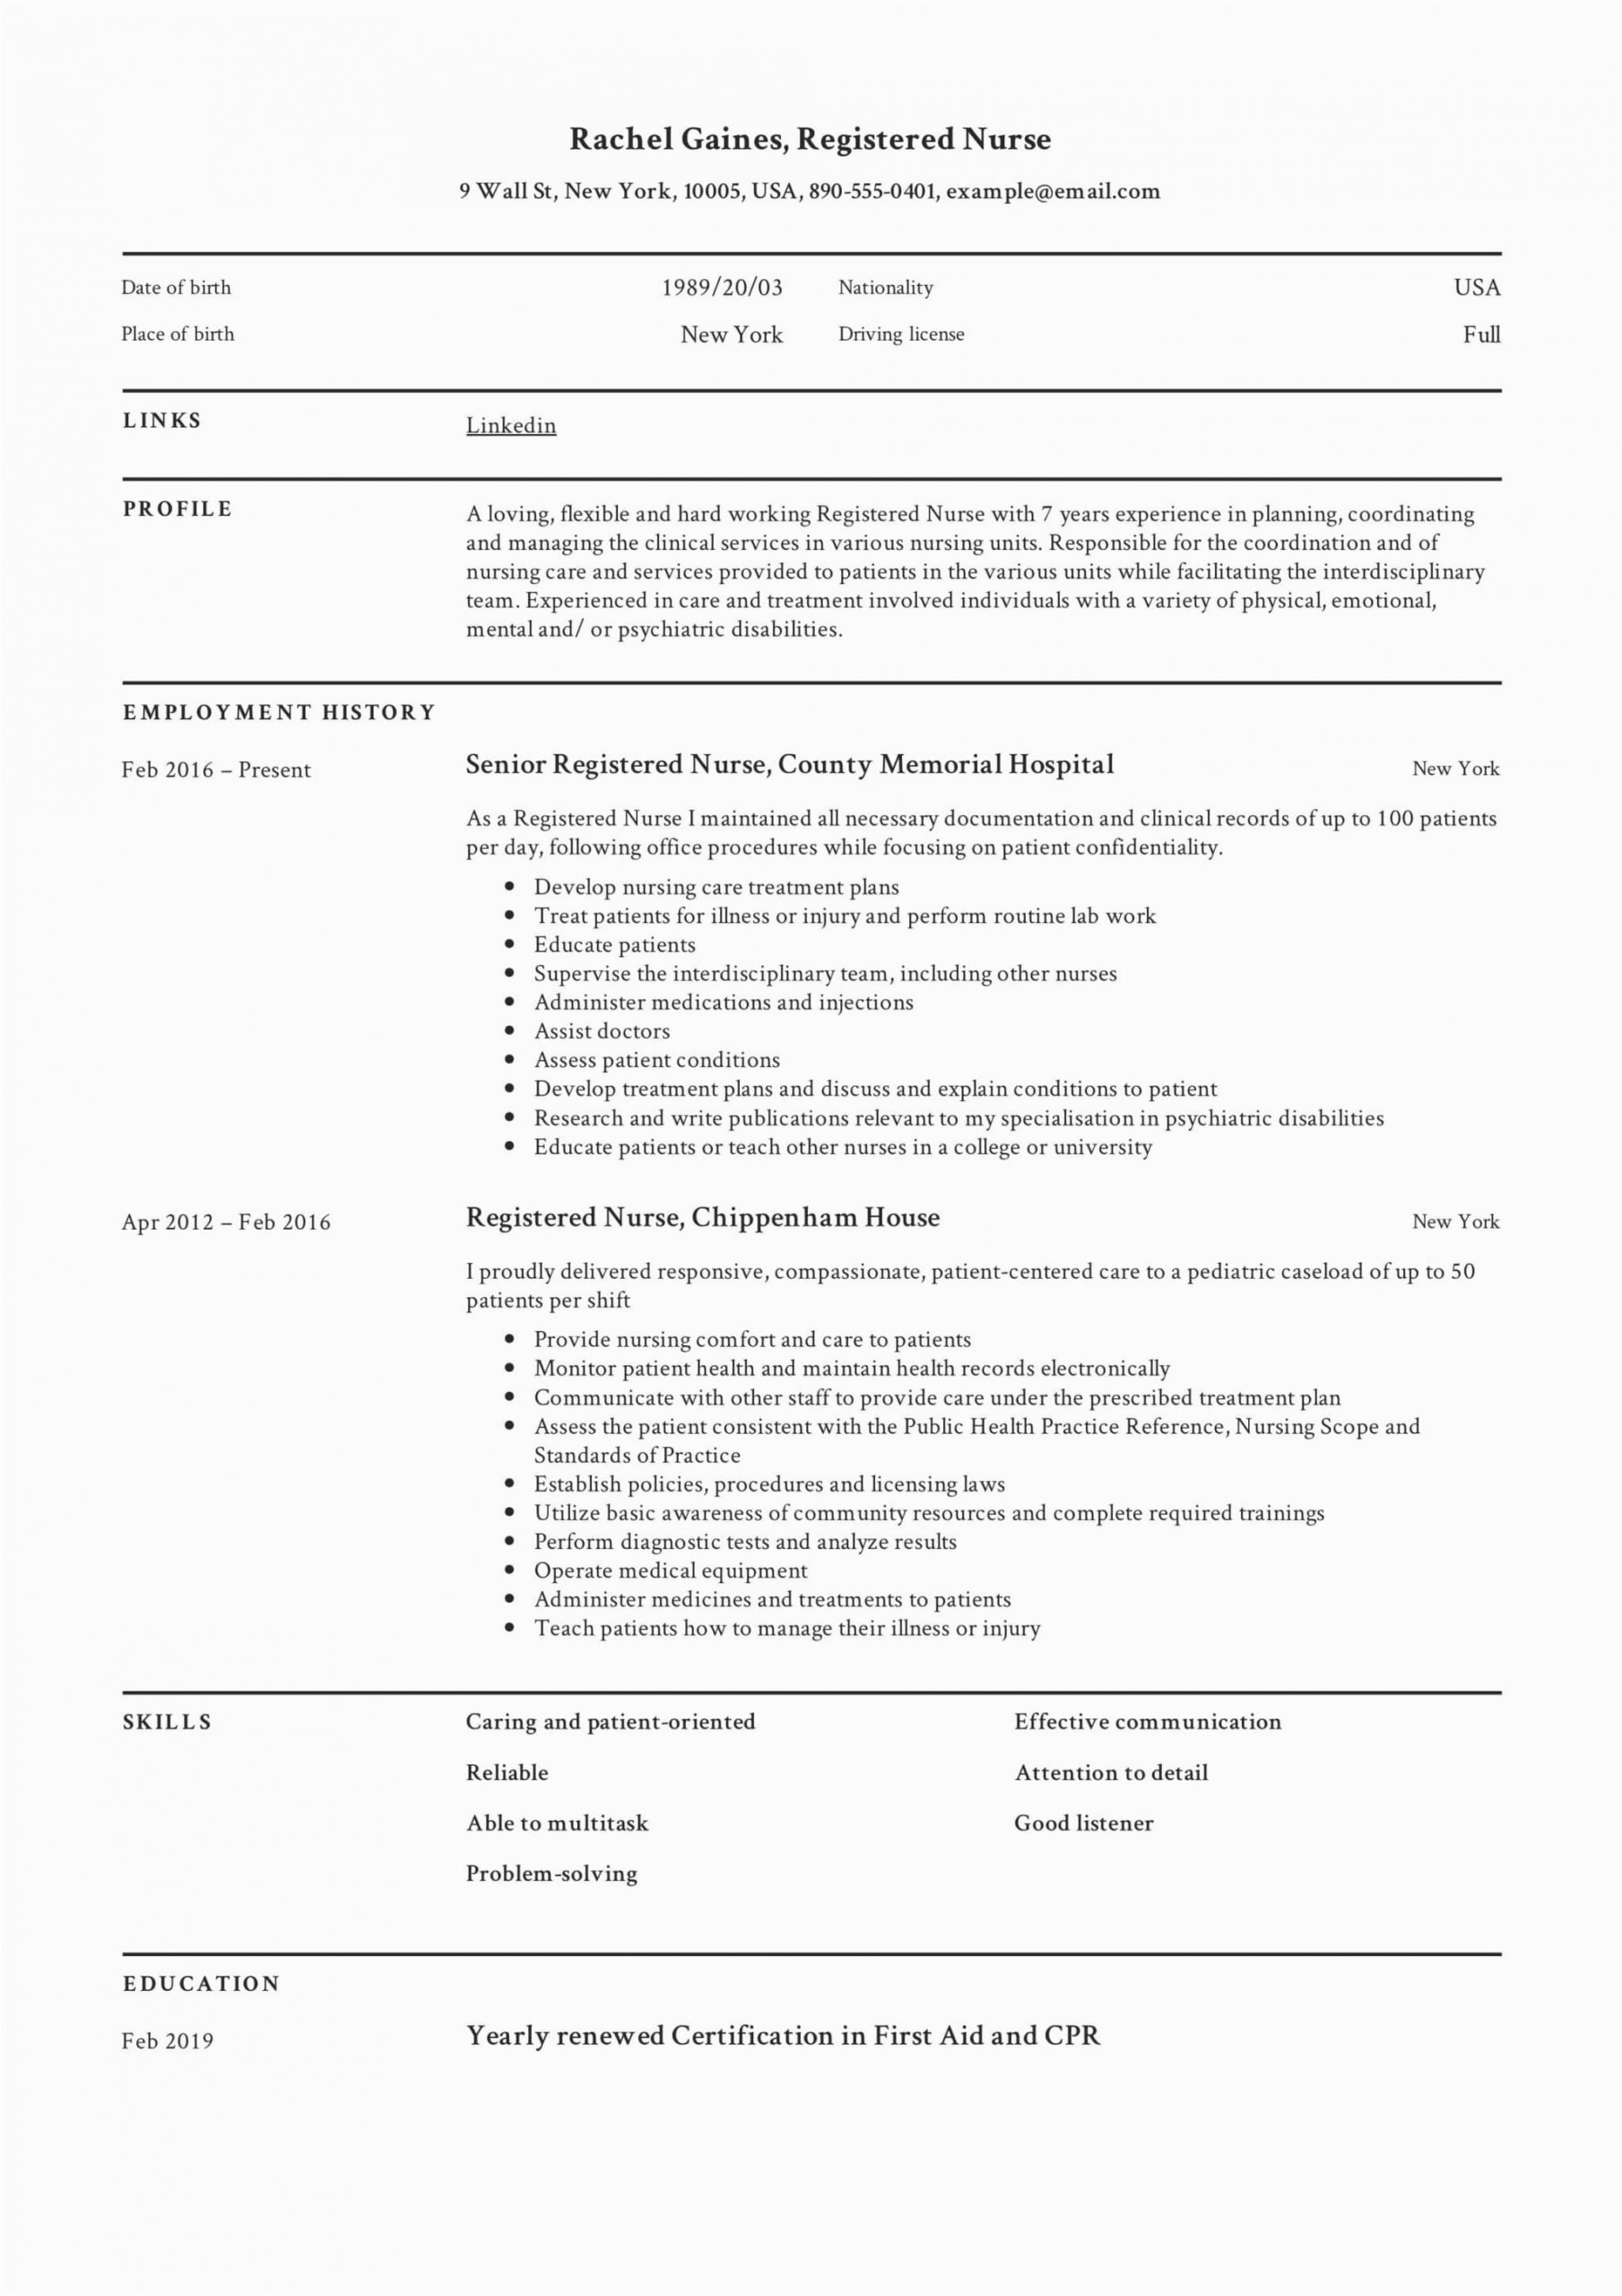 Free Sample Resume for Registered Nurse Registered Nurse Resume Sample & Writing Guide